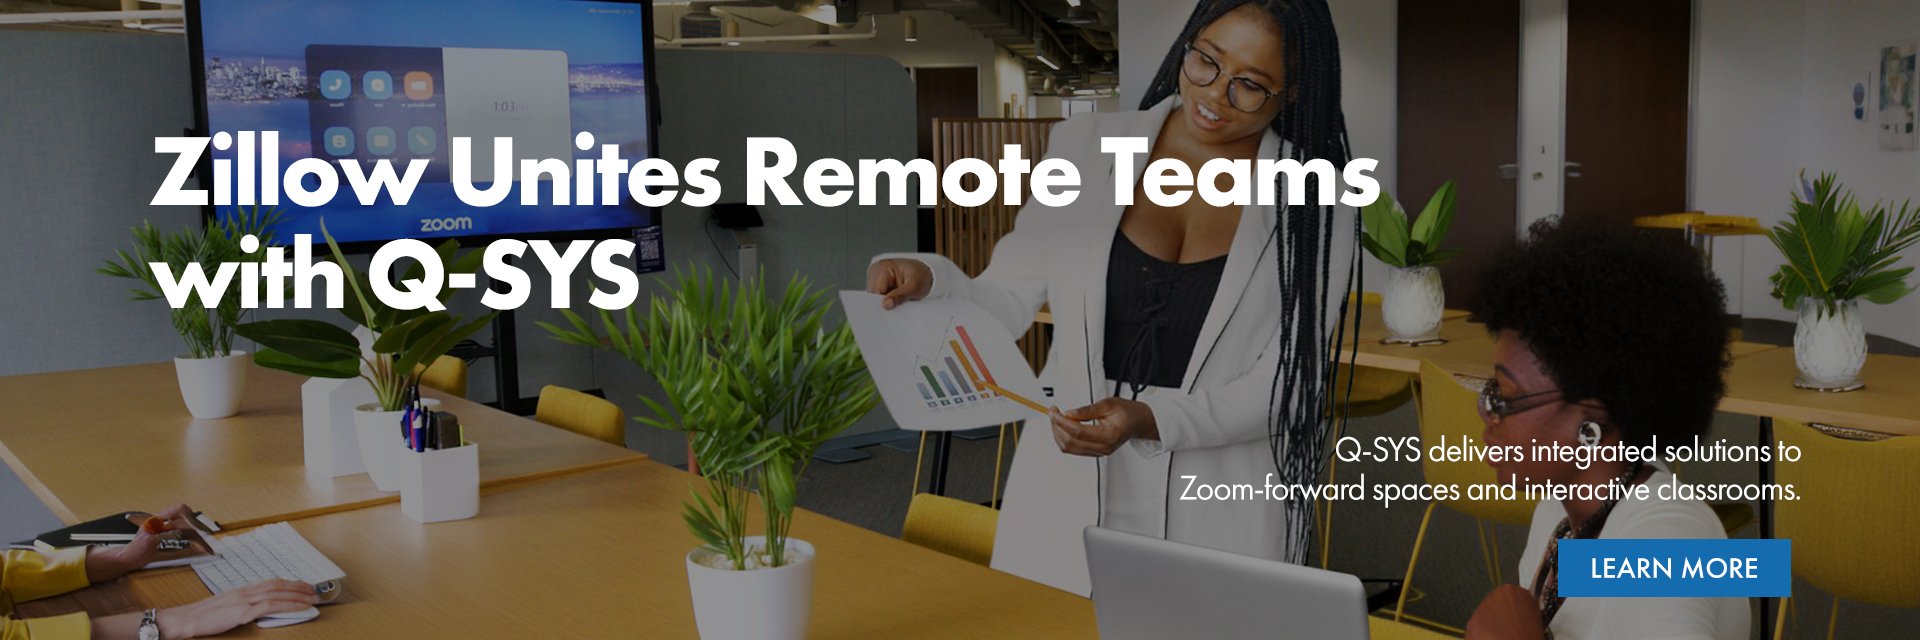 Bannerntext zur Zillow Fallstudie: "Zillow Unites Remote Teams mit Q-SYS"